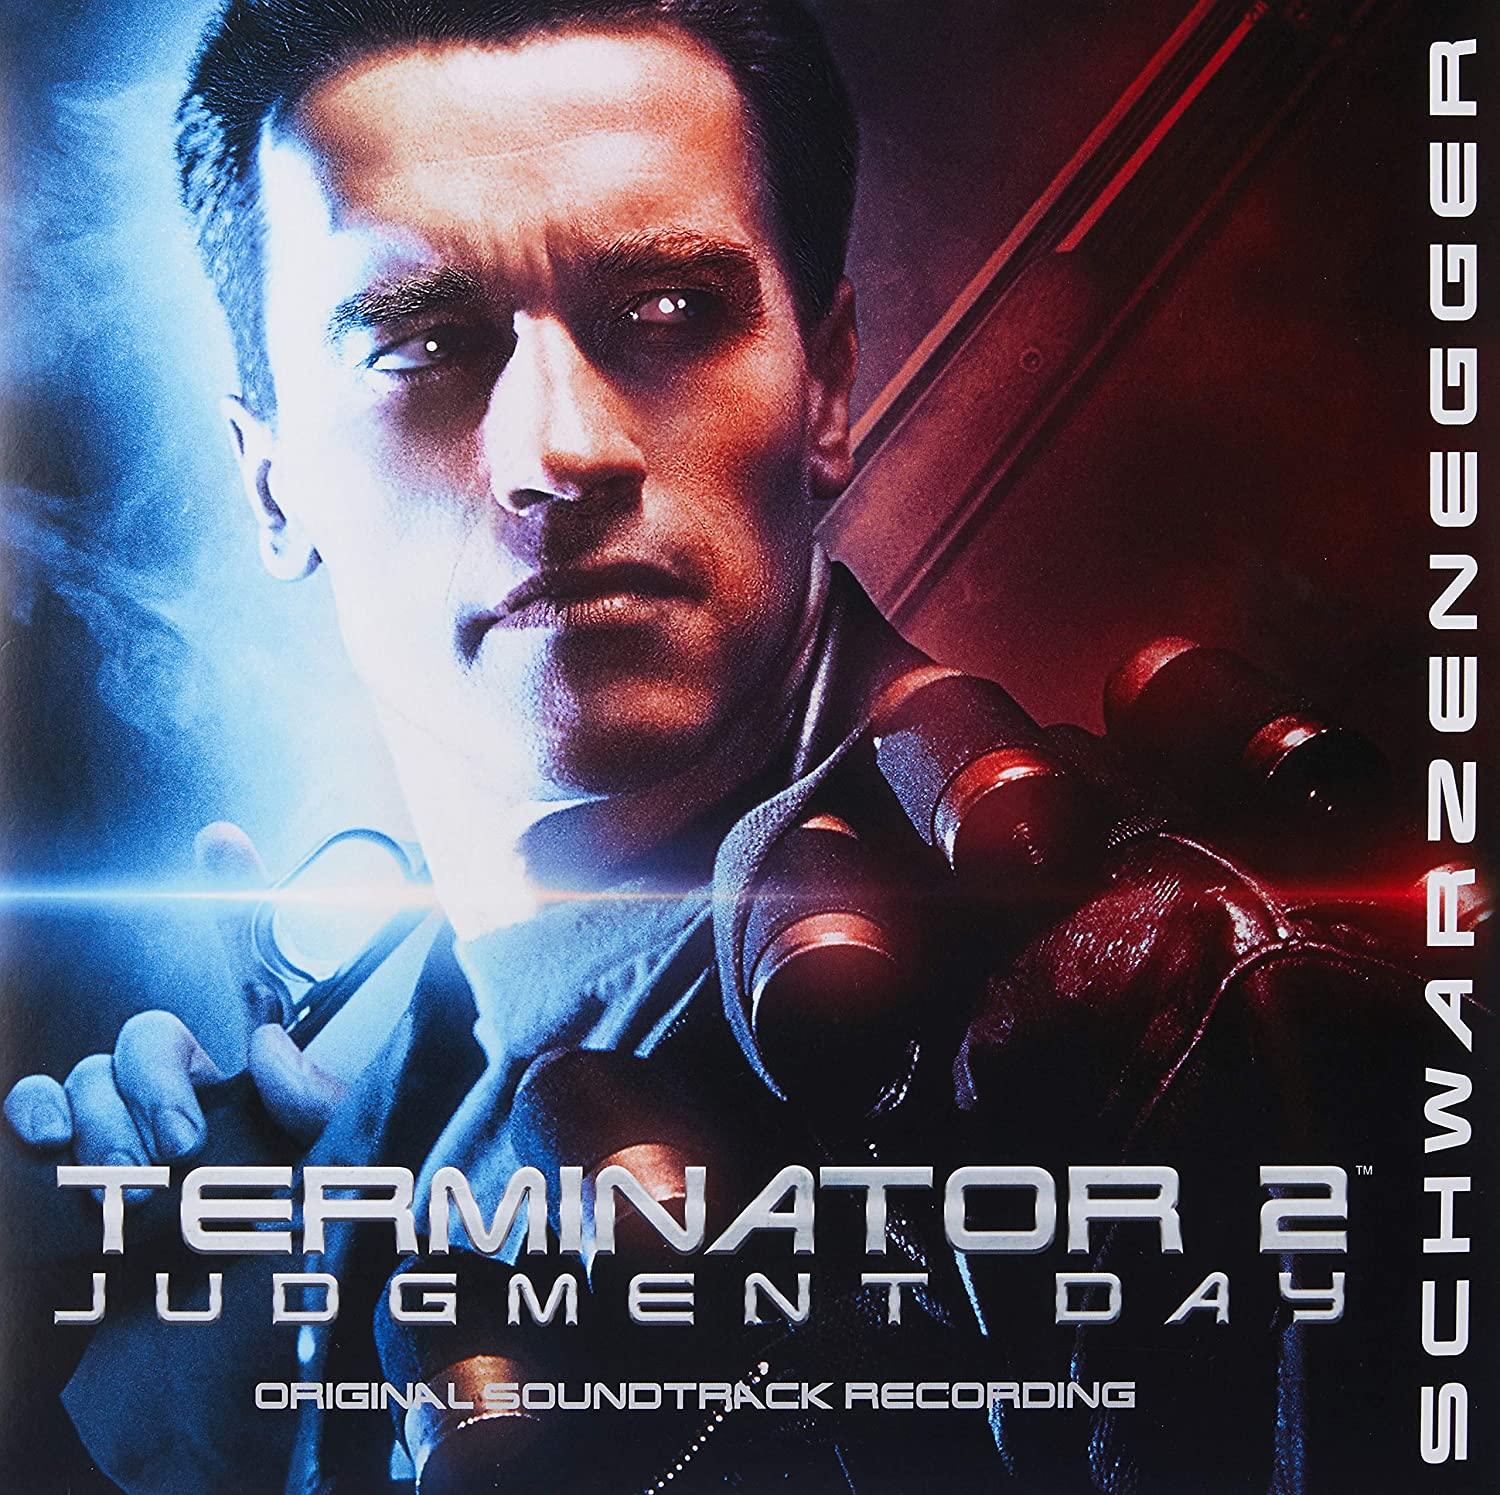 Terminator 2: Judgment Day (Original Soundtrack Recording) (Vinyl LP)